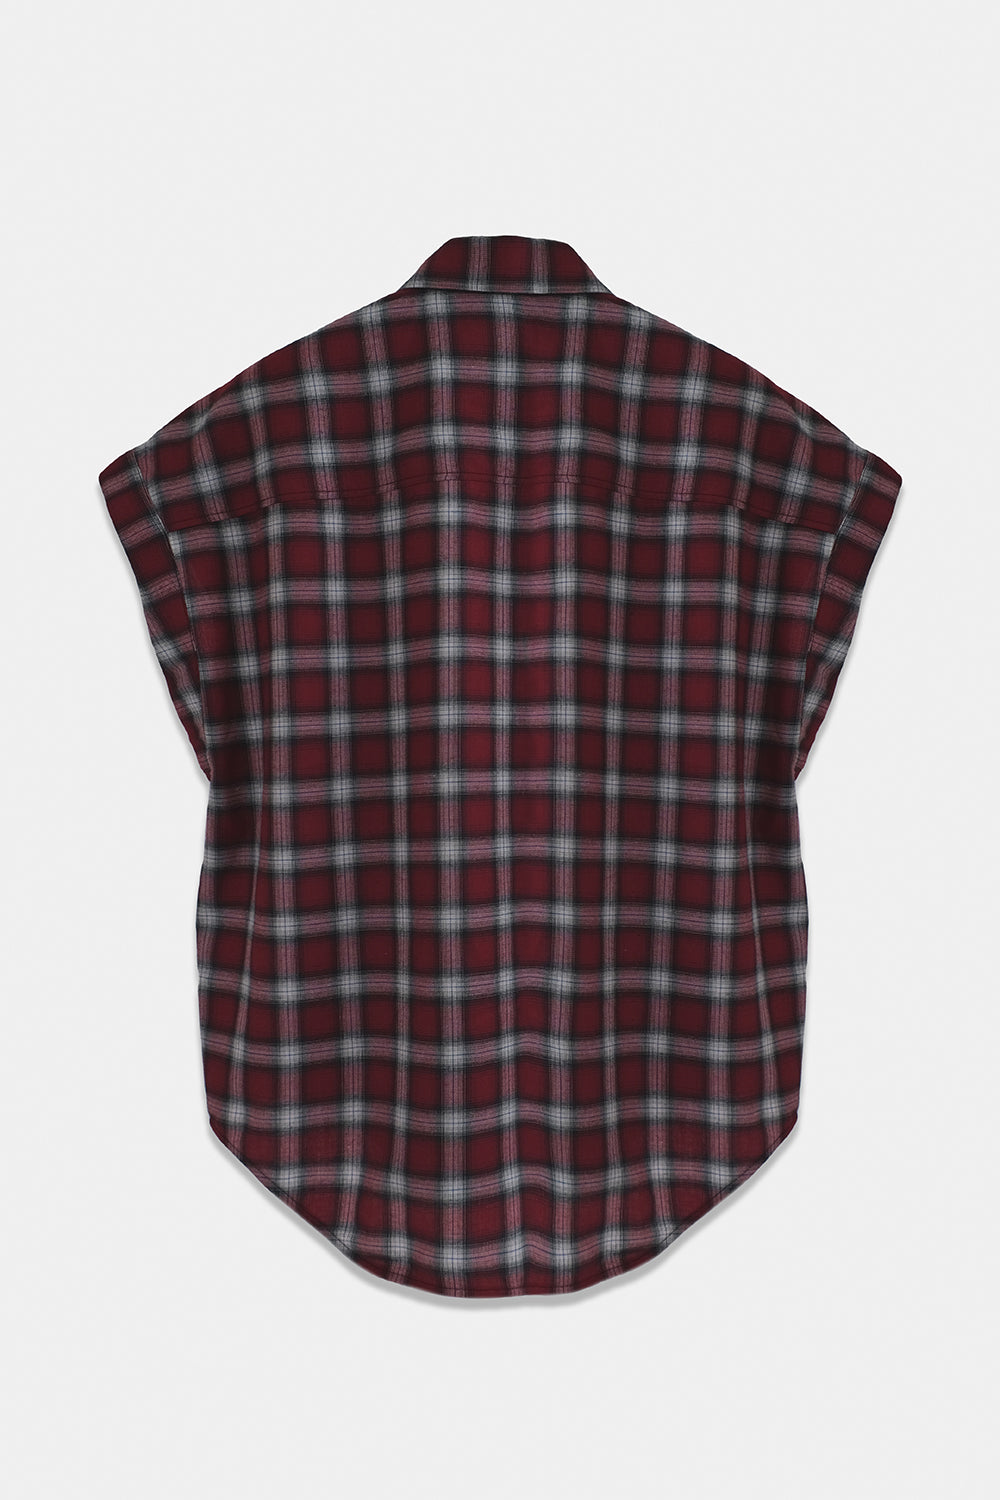 SEANNUNG - MEN - Plaid Saddle Shoulder Shirt 格紋連袖襯衫